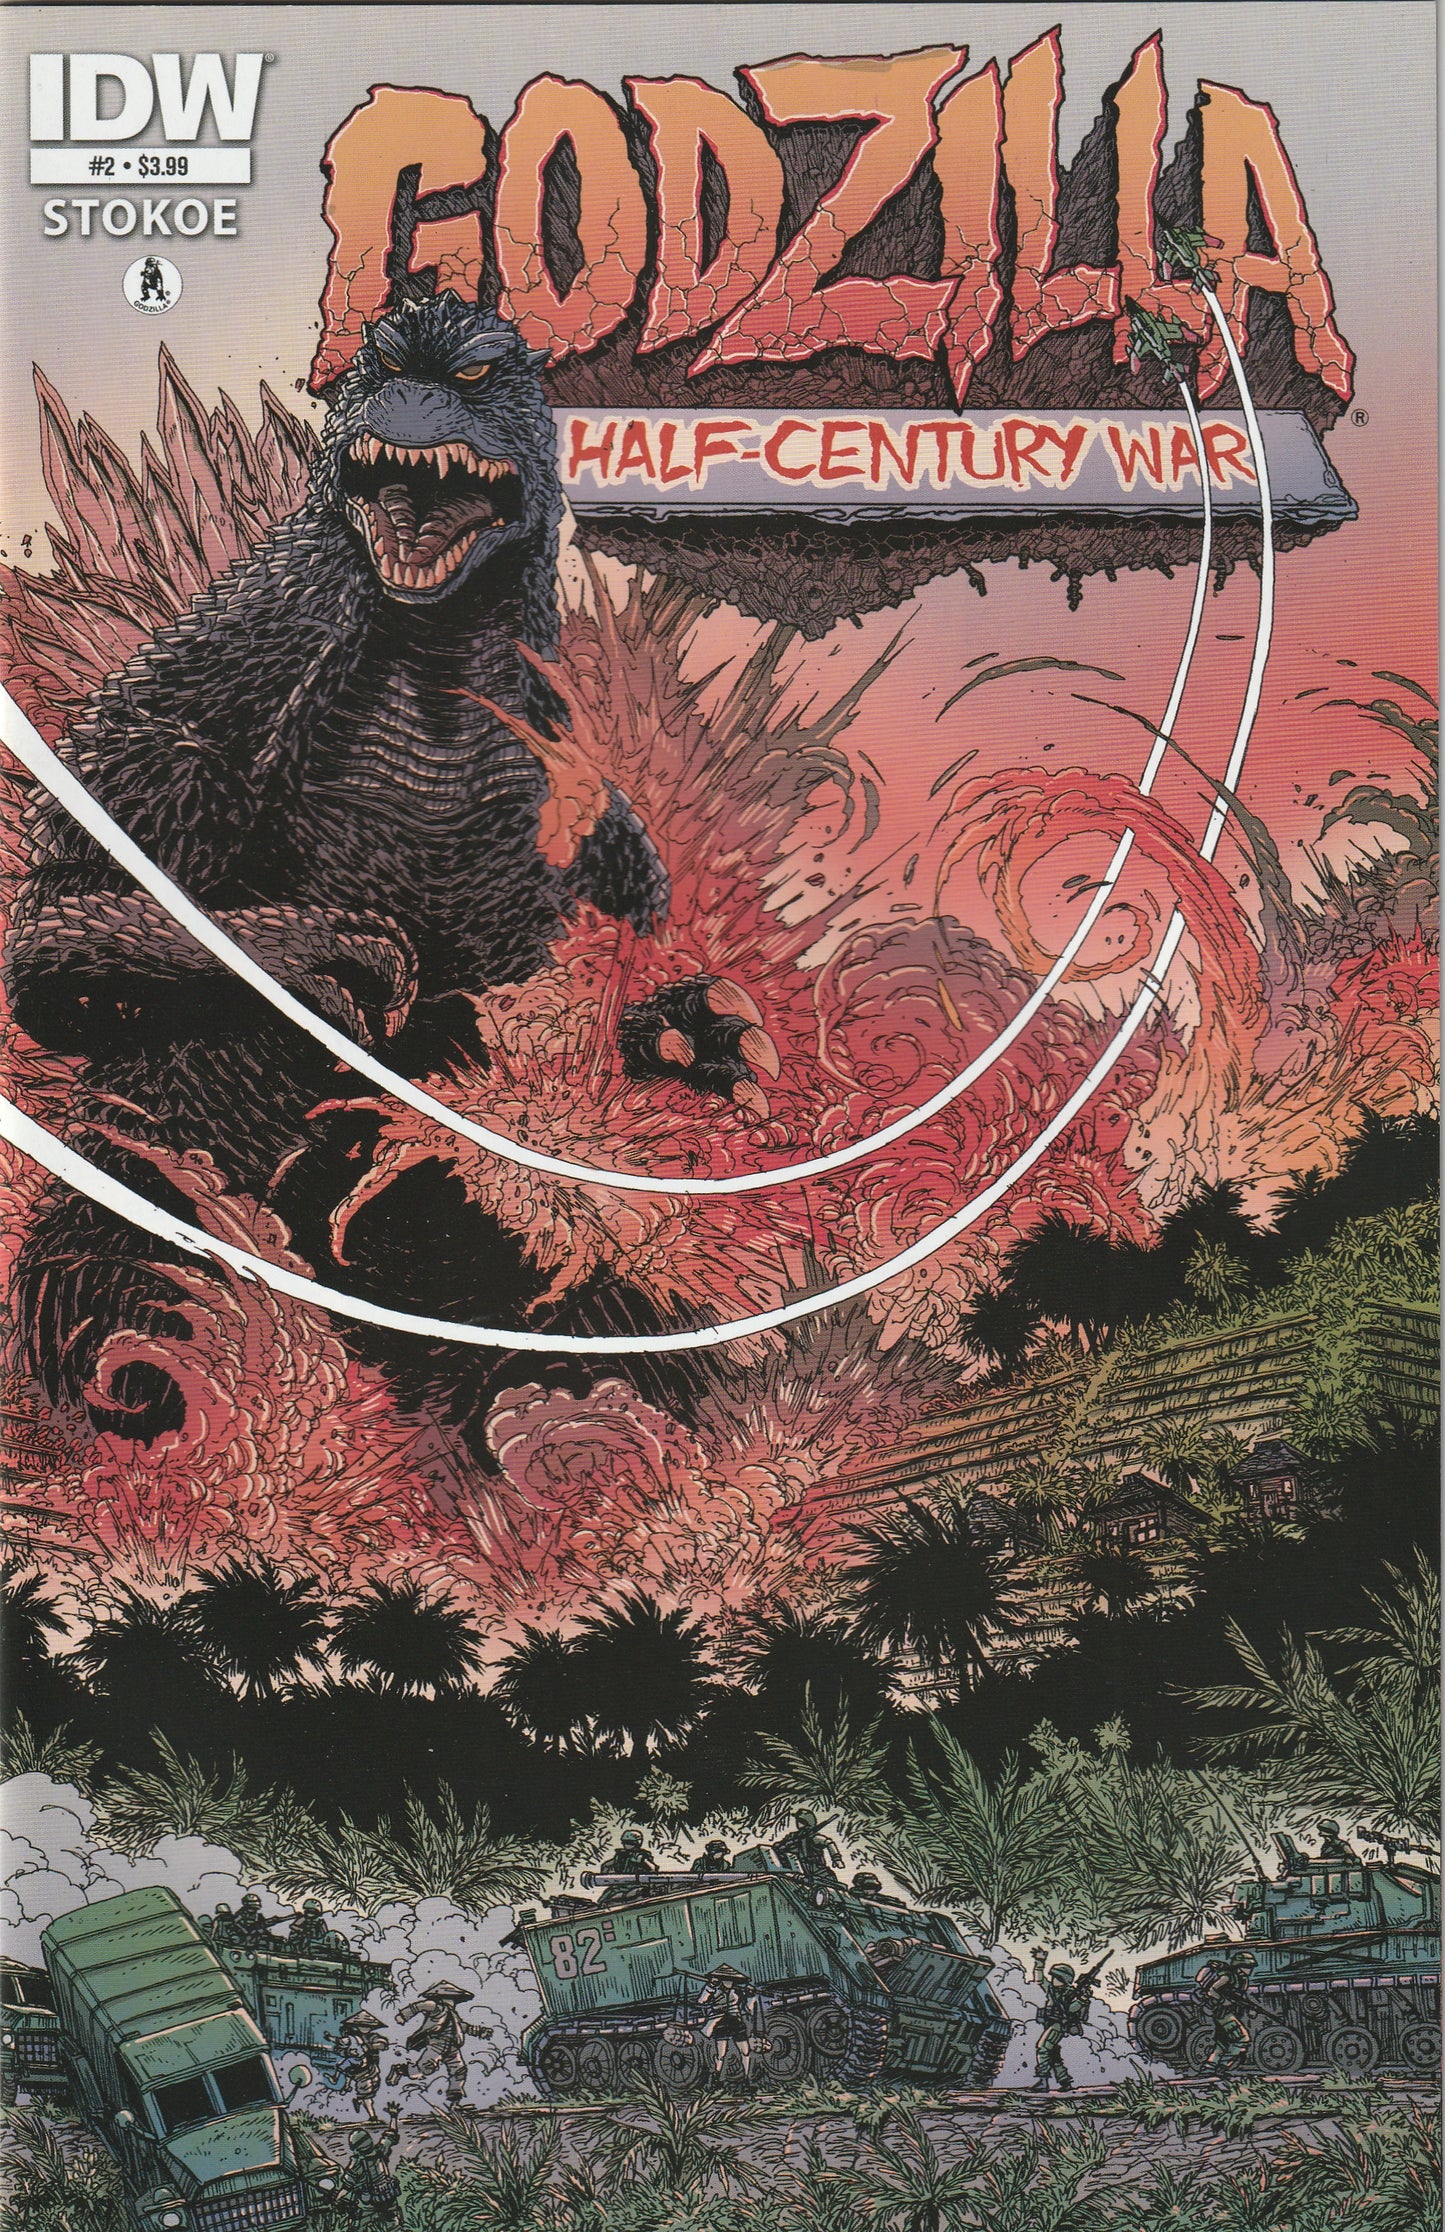 Godzilla: The Half Century War #2 (2012) - Cover by James Stokoe